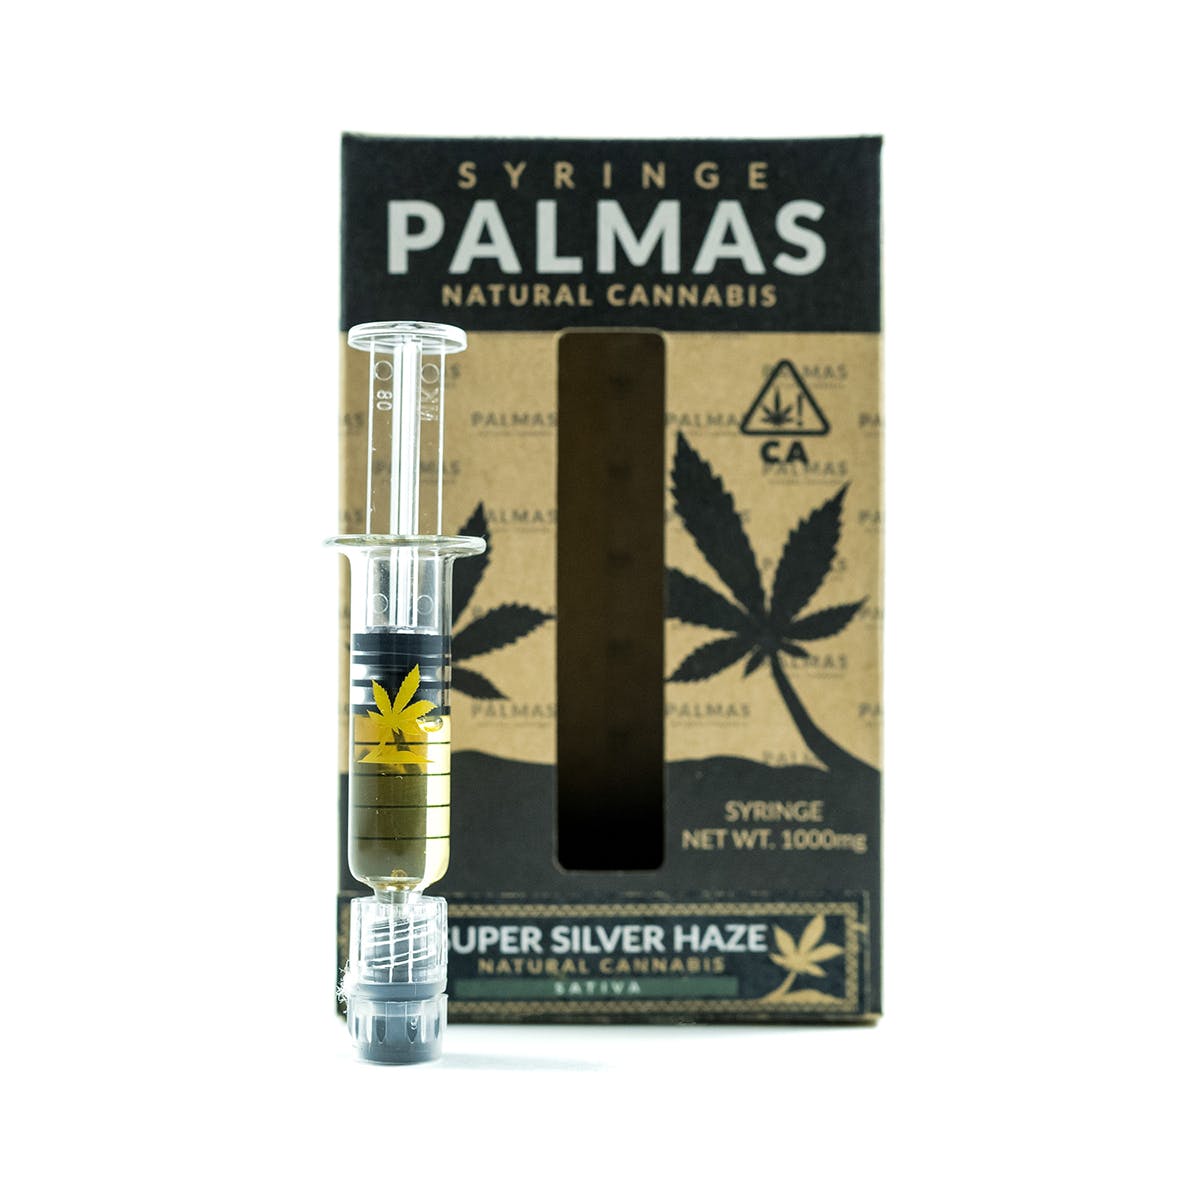 marijuana-dispensaries-white-castle-in-wilmington-palmas-syringe-super-silver-haze-1000mg